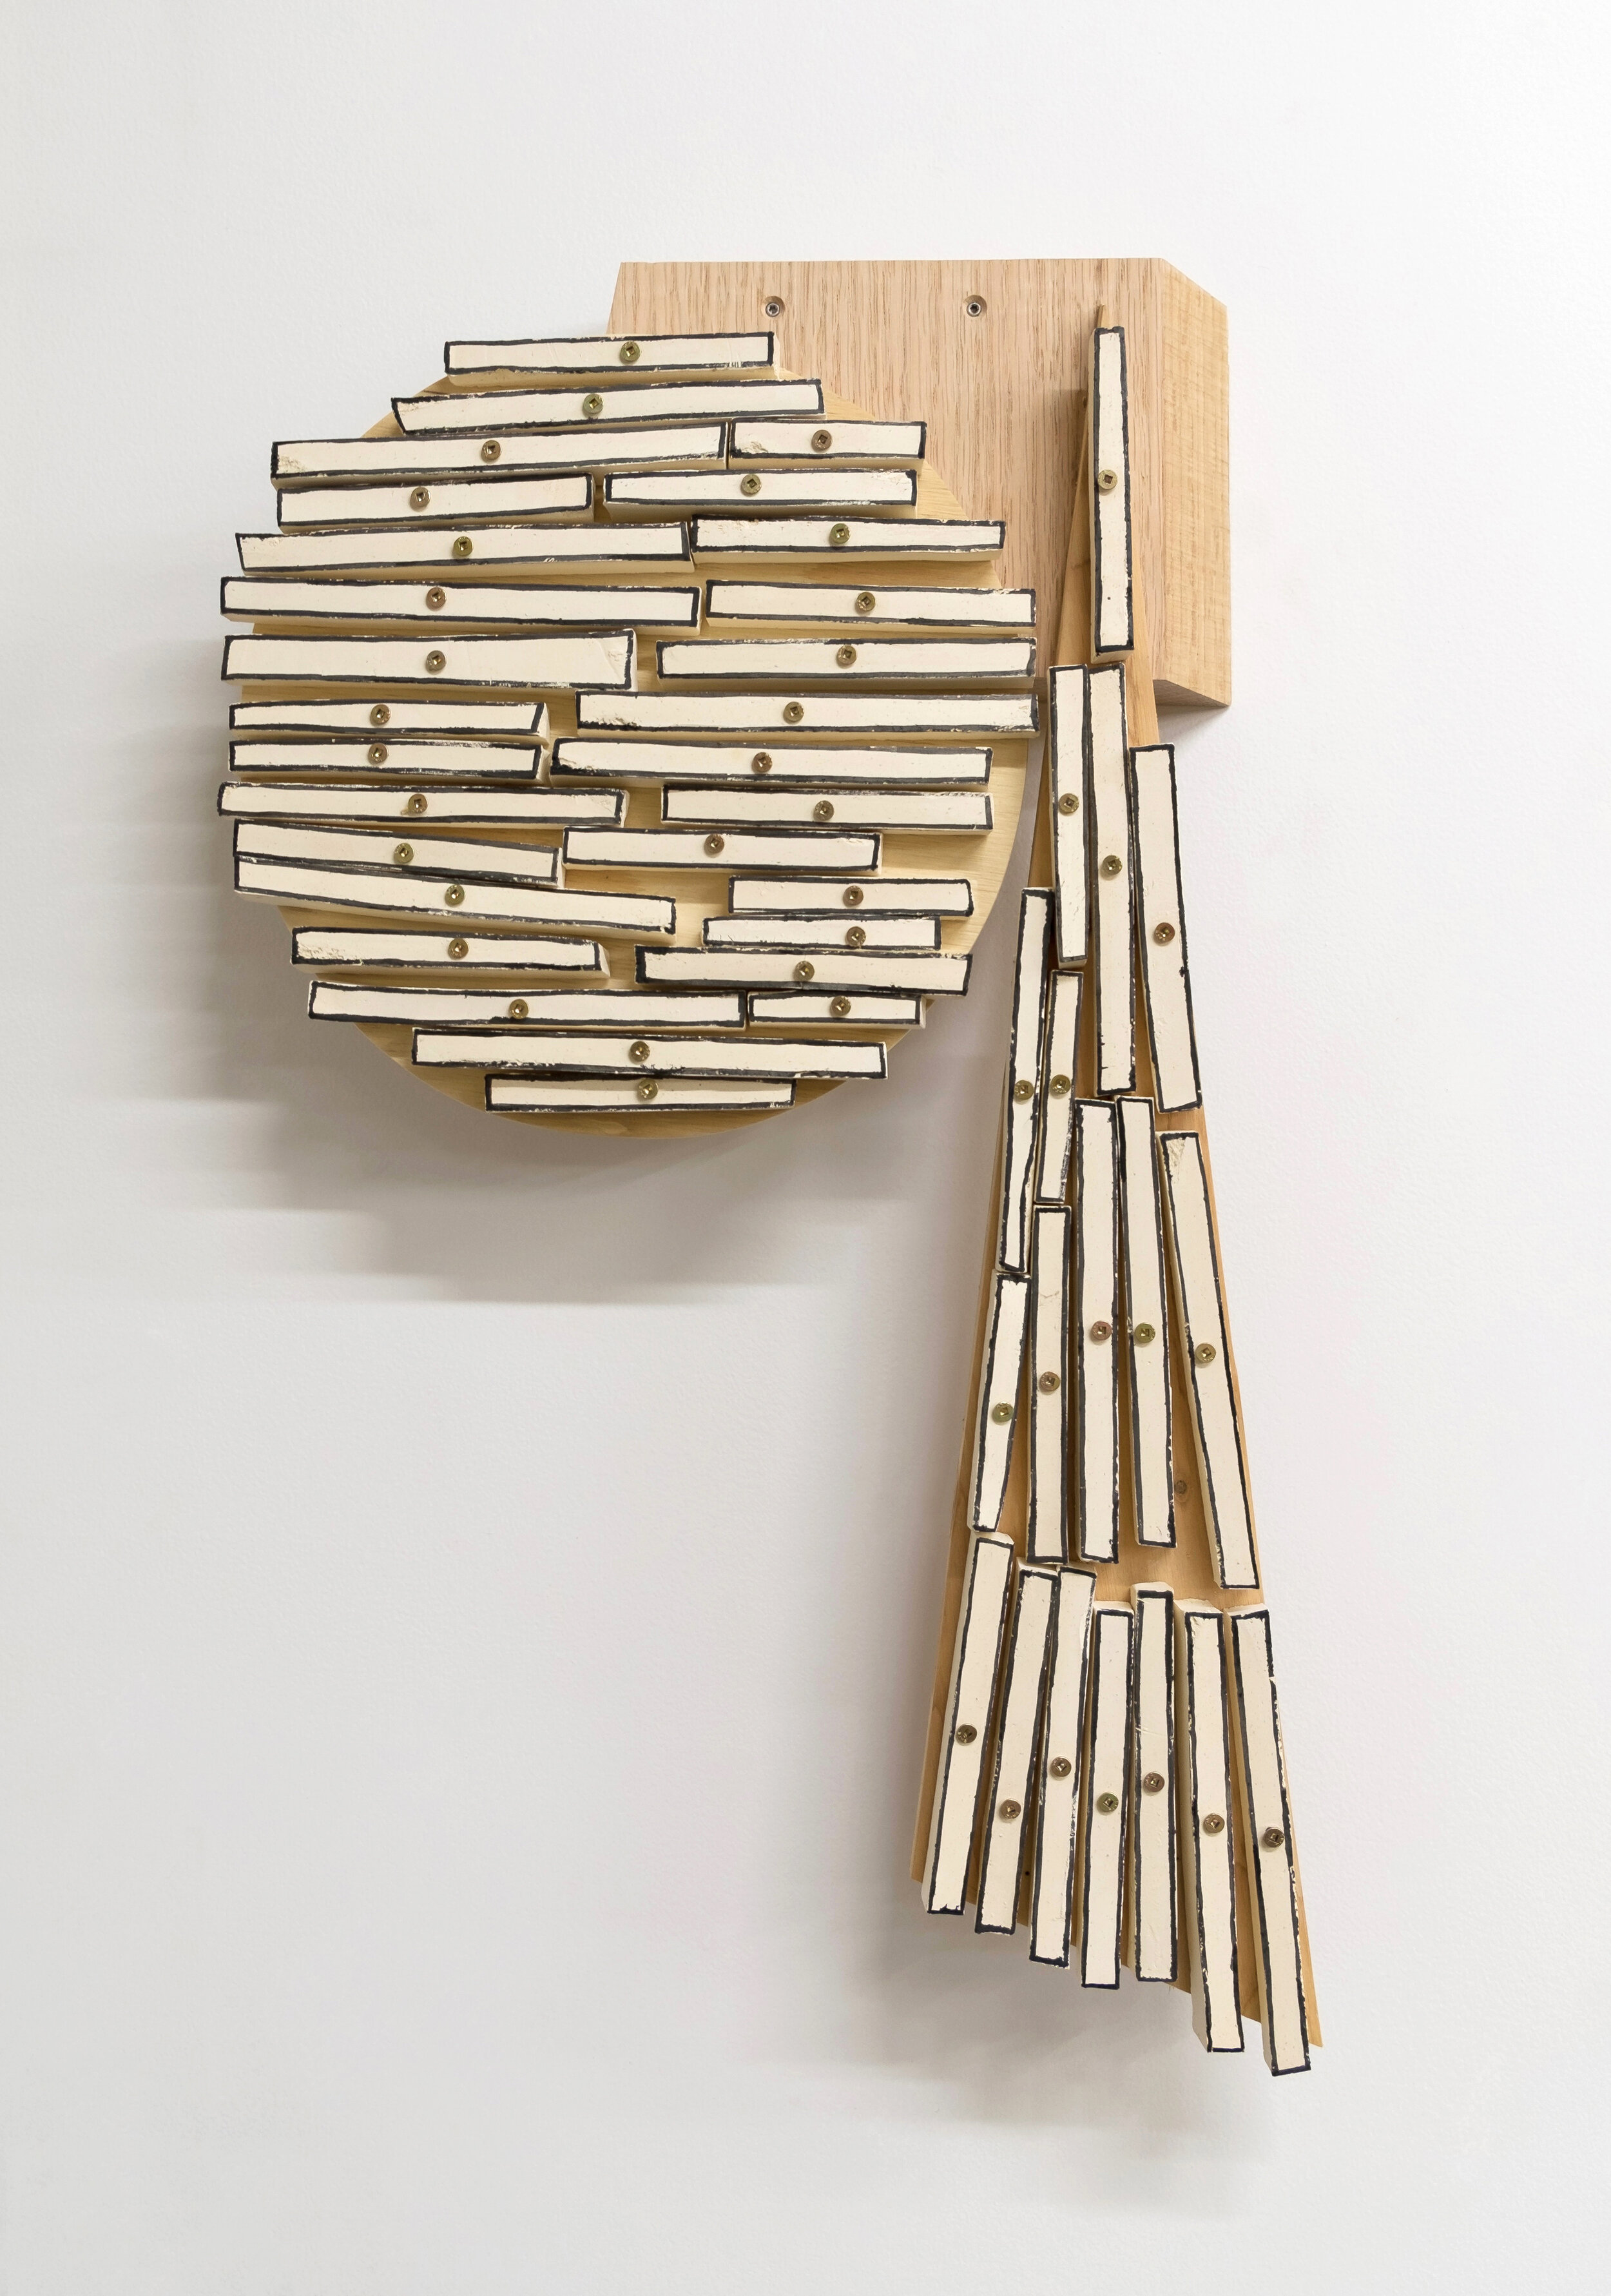  Christina Tenaglia, untitled, 2019, wood, earthenware, ink, screws, 14” x 23-2/3" x 2-7/8” 